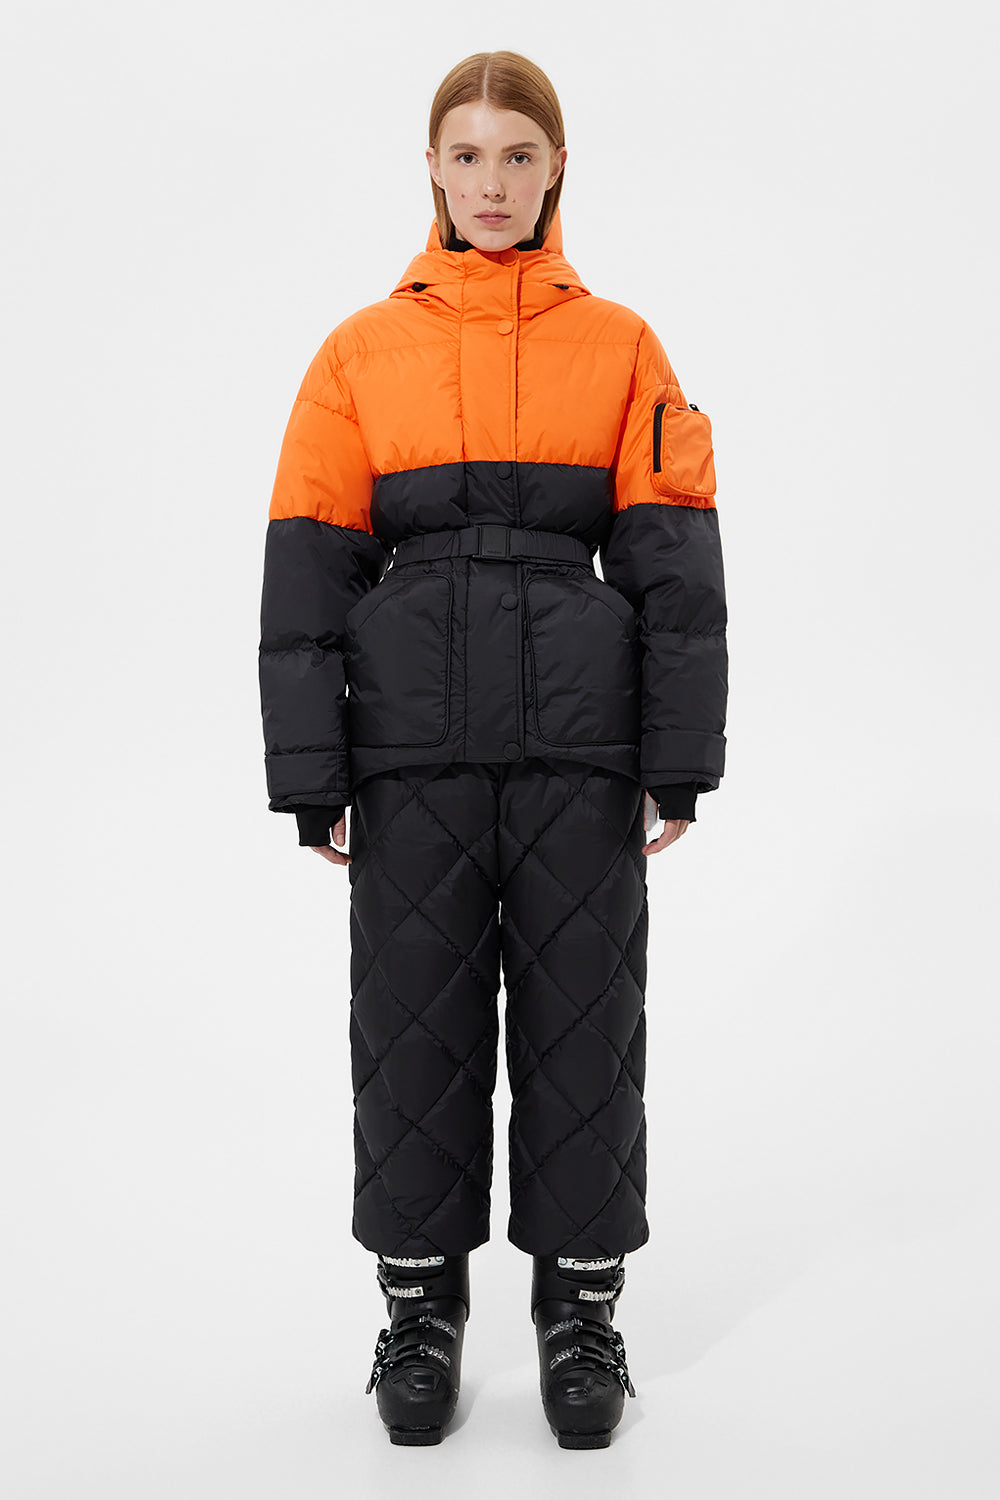 Apres Ski Michlin Jacket Tec Orange + Tec Black